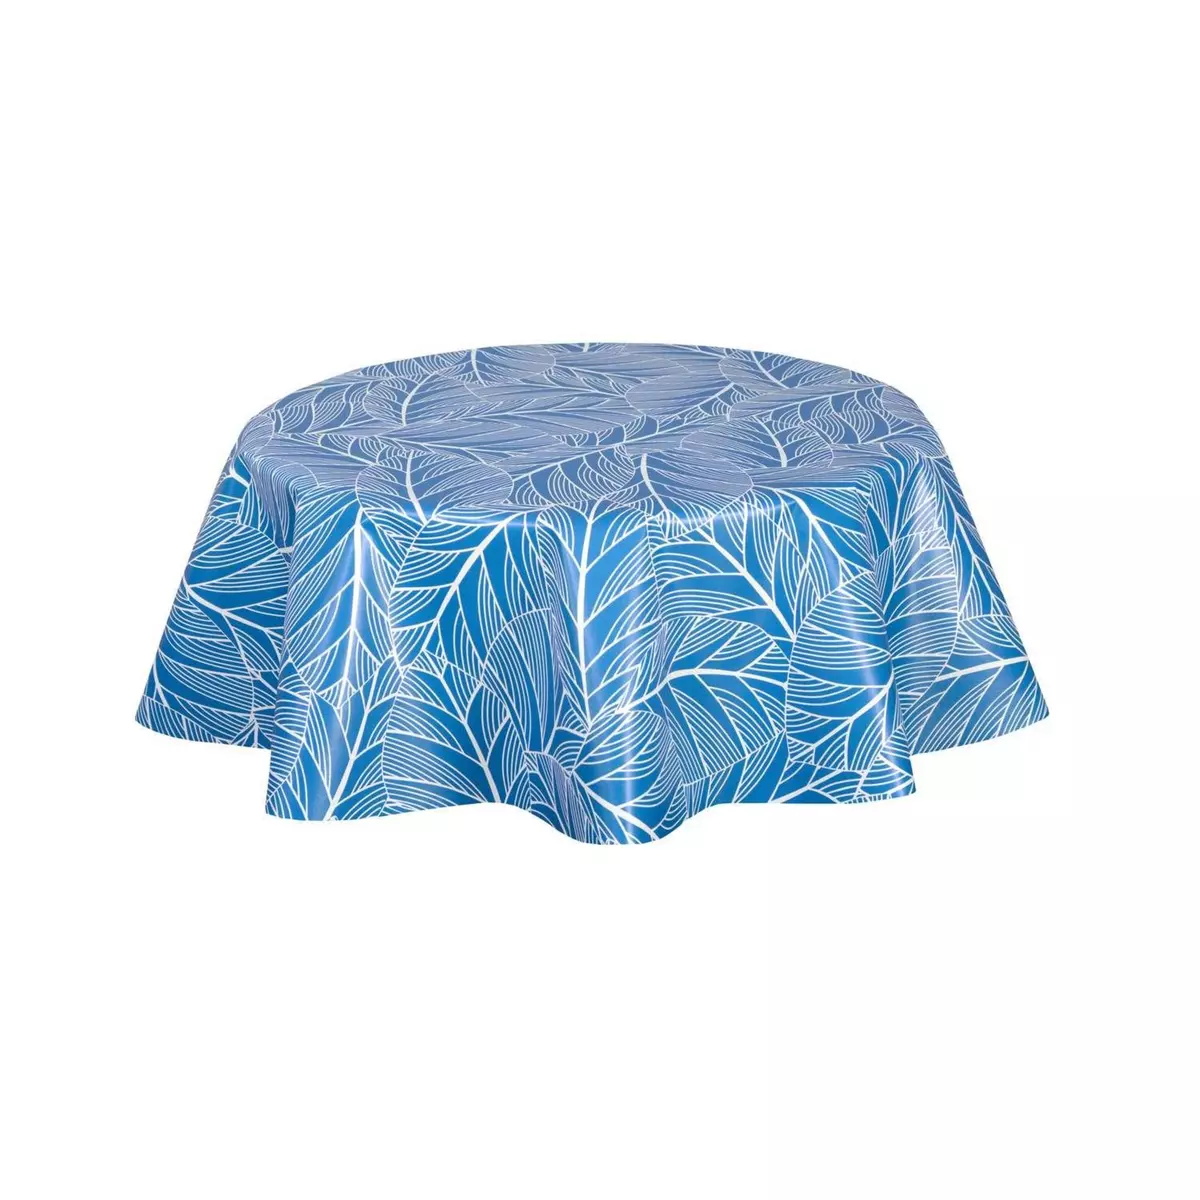 HABITABLE Nappe en toile cirée ronde Eloa - Diam. 150 cm - Bleu